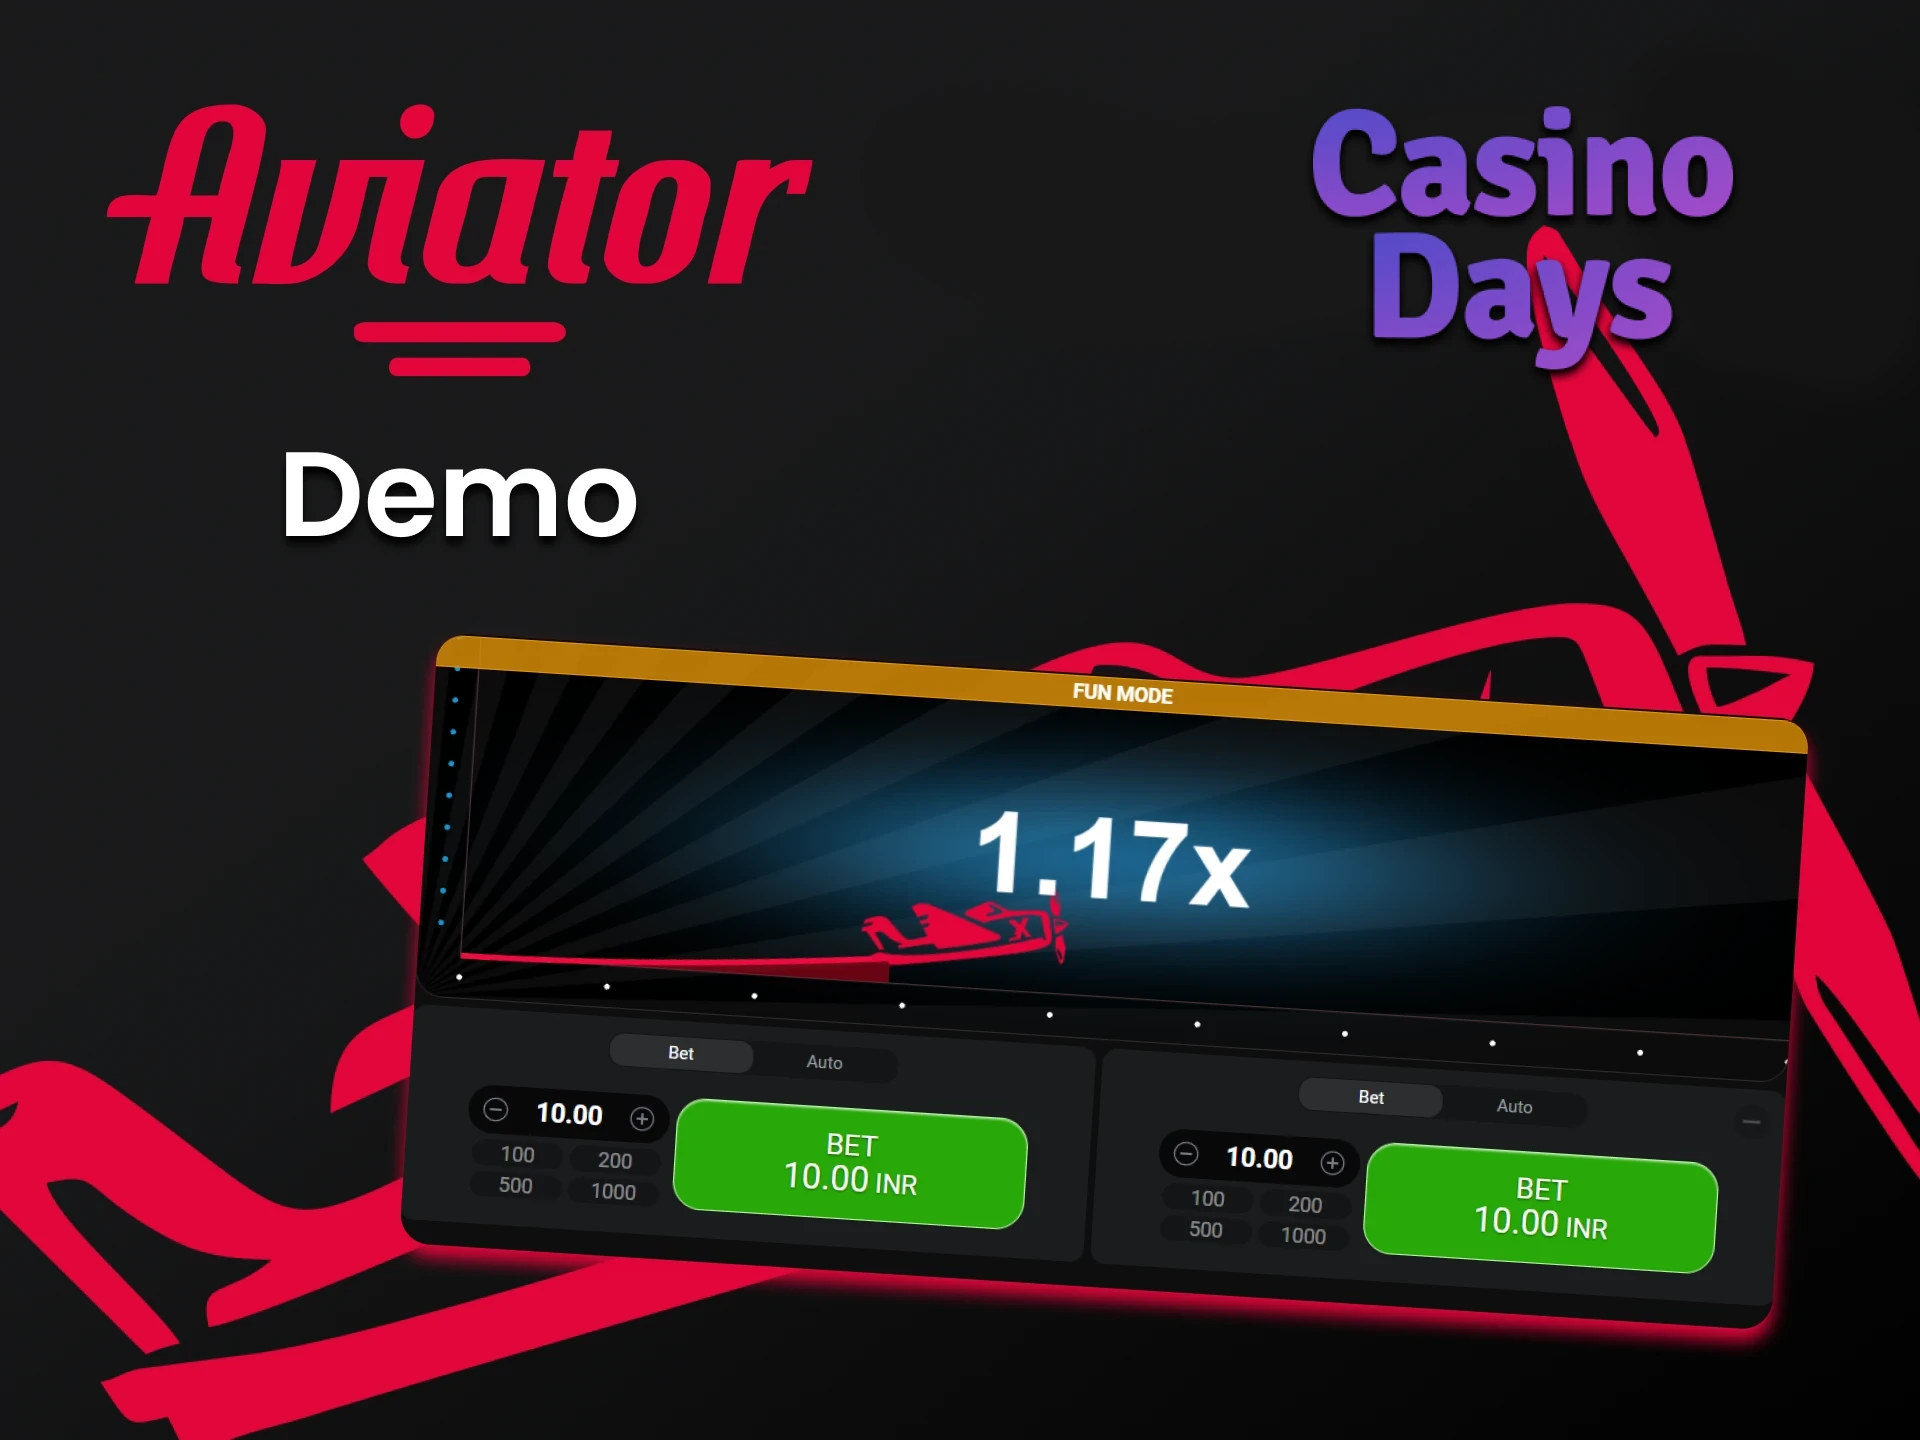 Practice the demo version of Aviator at Casino Days.